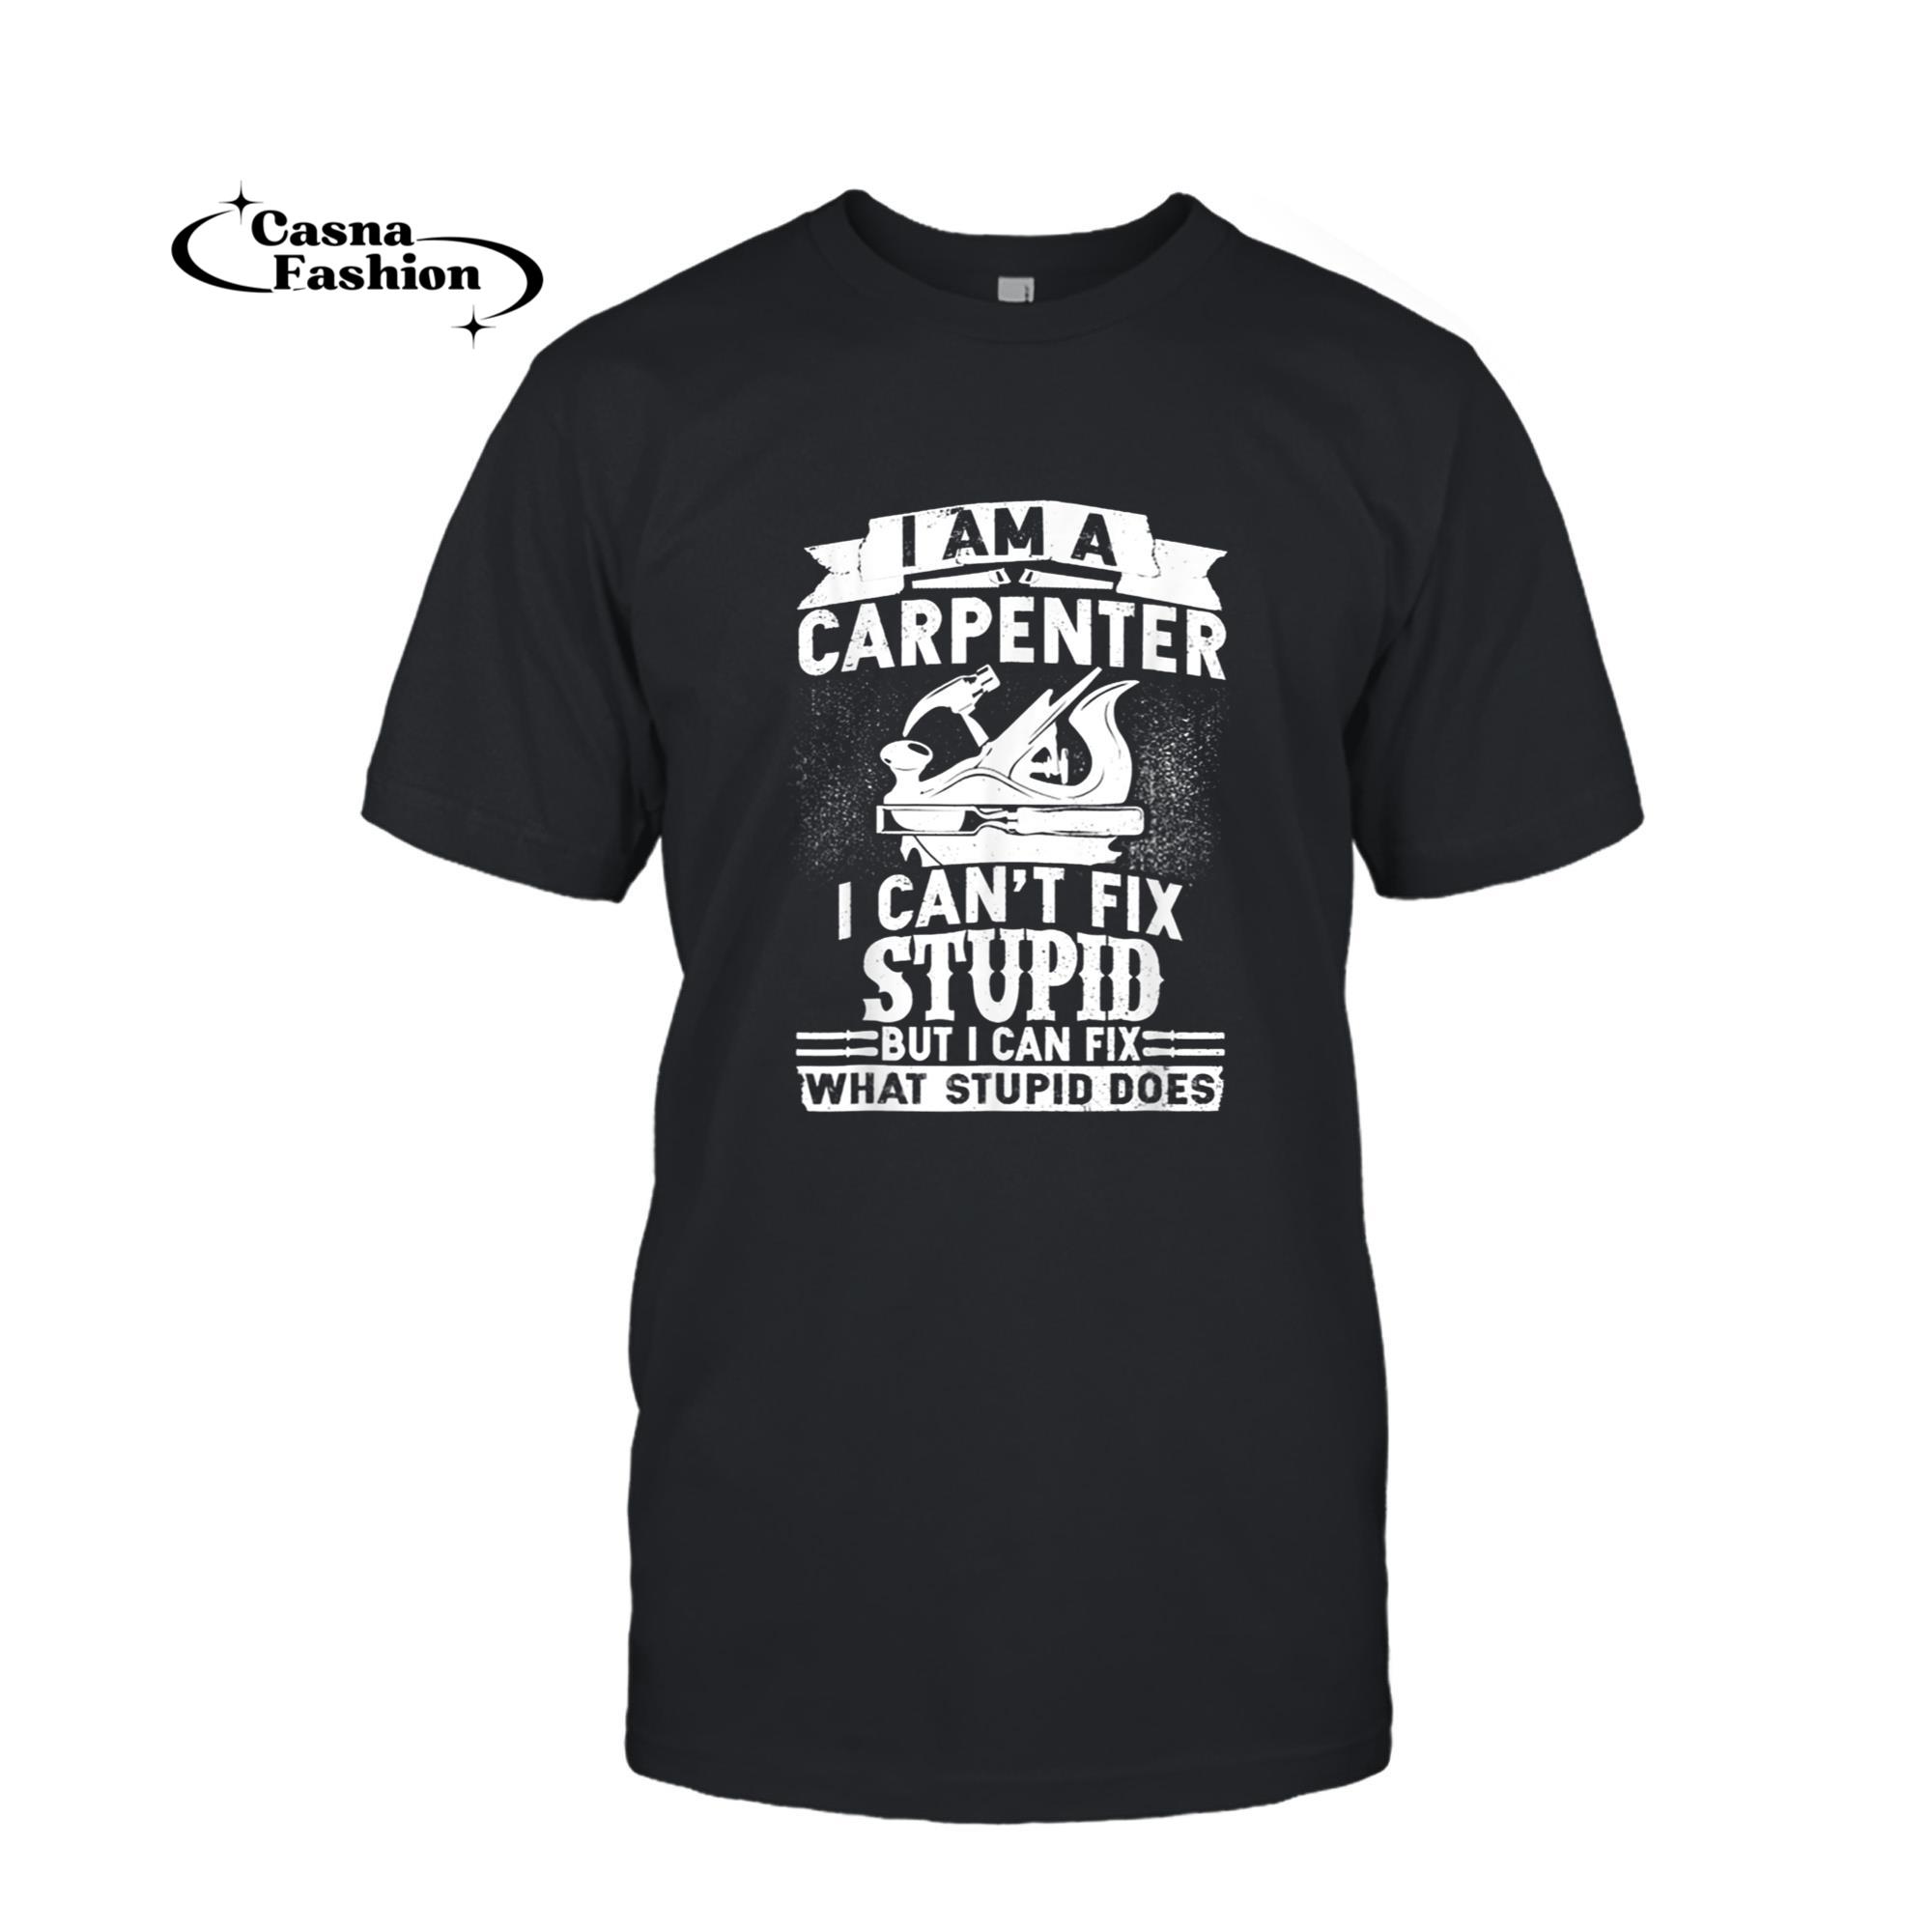 casnafashion_T-shirt_I Am A Carpenter I Can't Fix Stupid But I Can Fix Stupid T-Shirt_T-shirt_Black